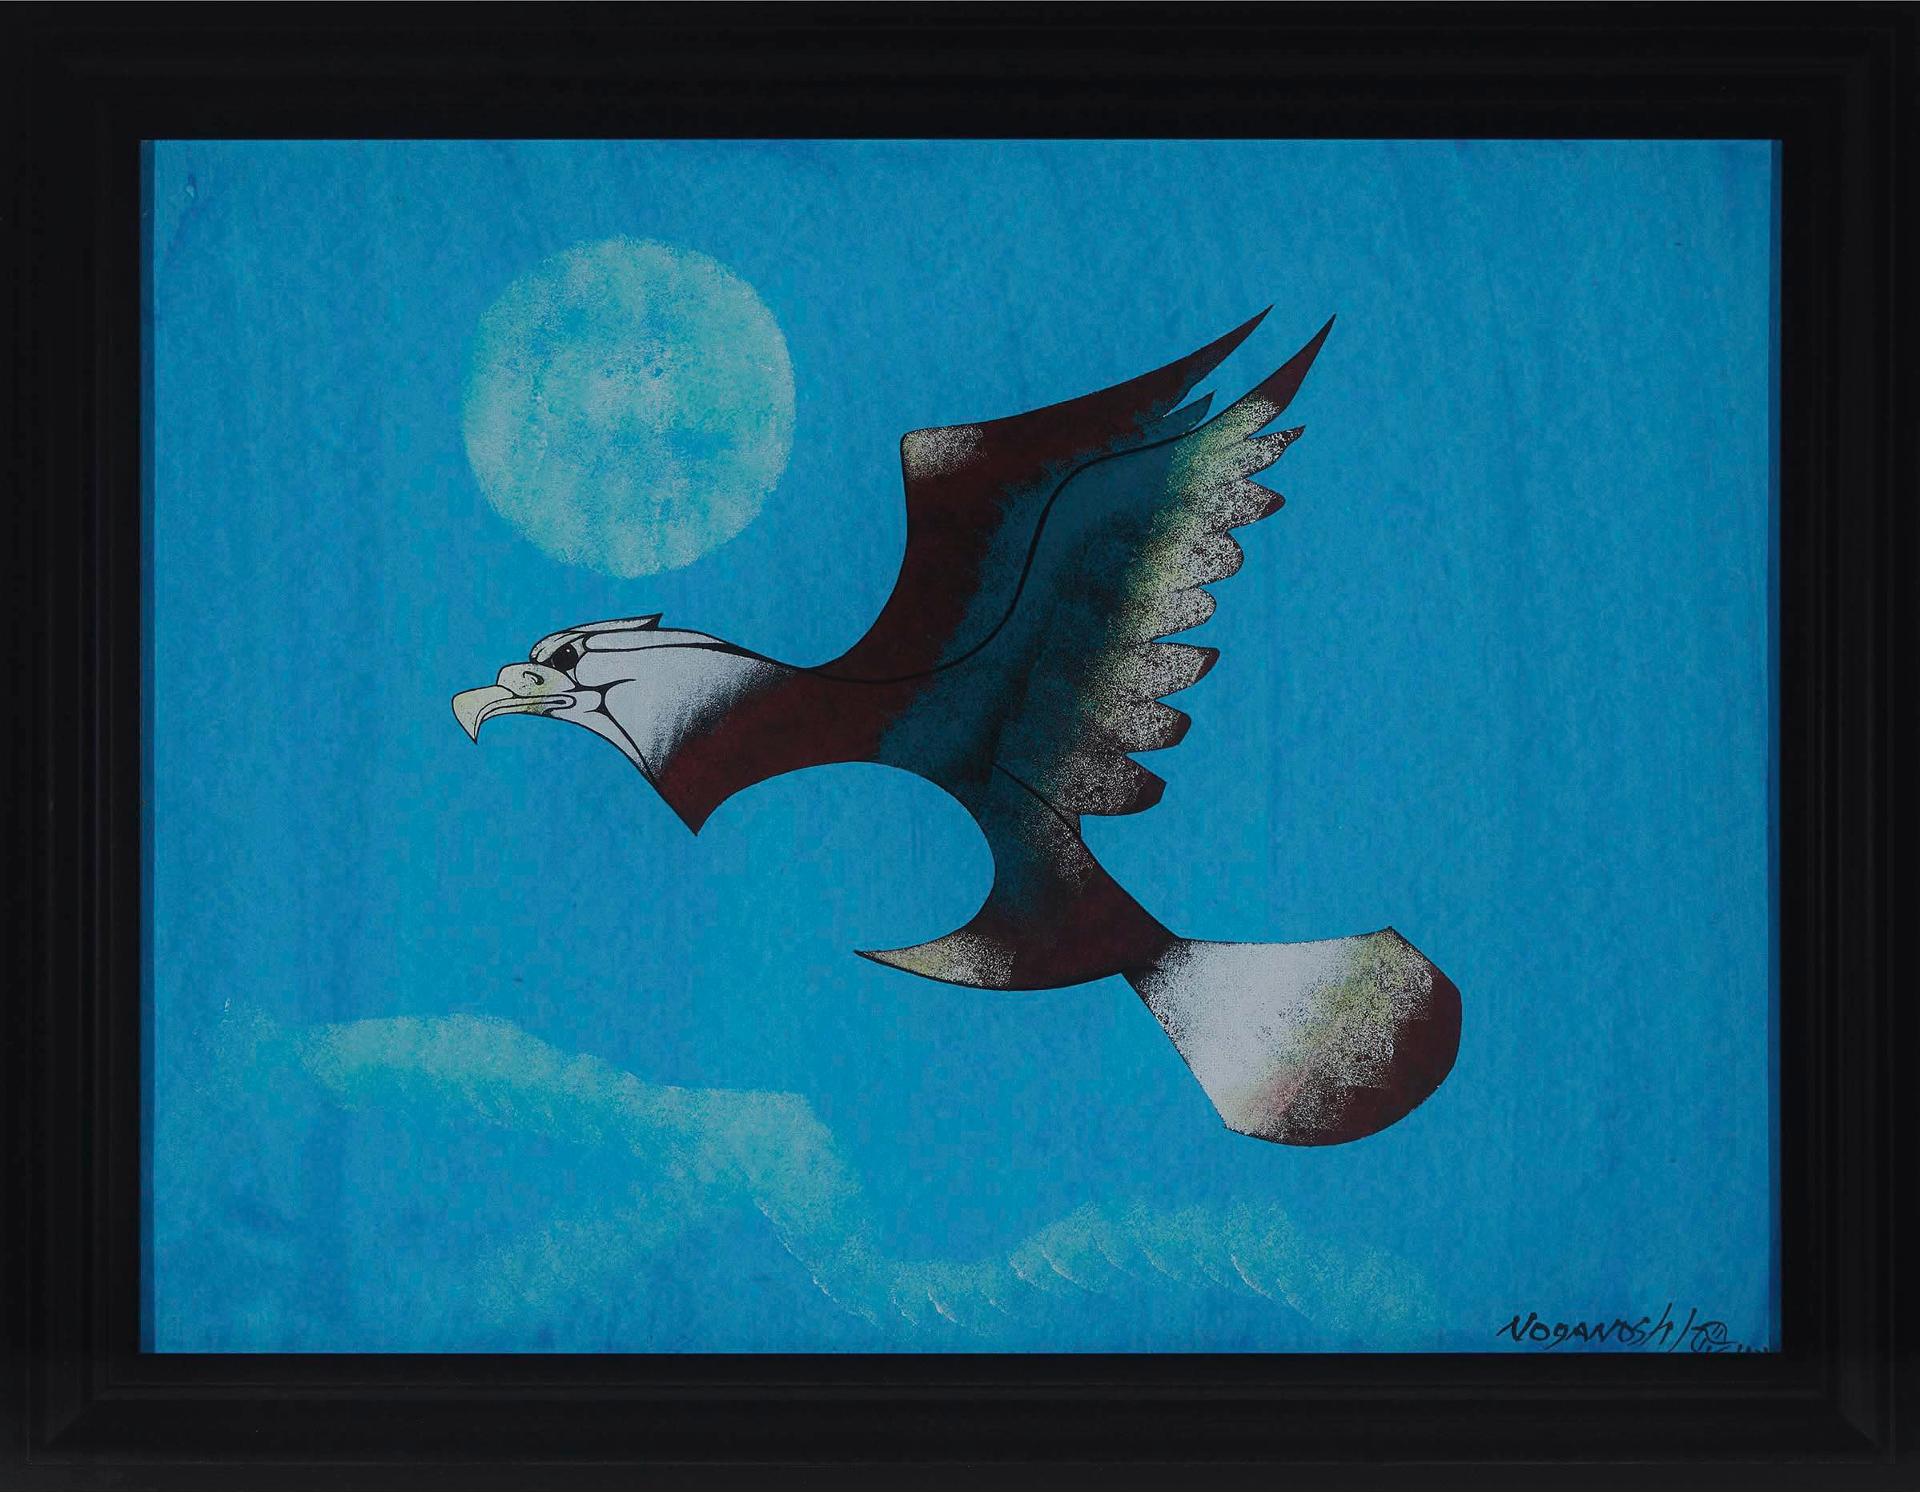 Russell Noganosh (1956) - Untitled (Eagle In Flight)